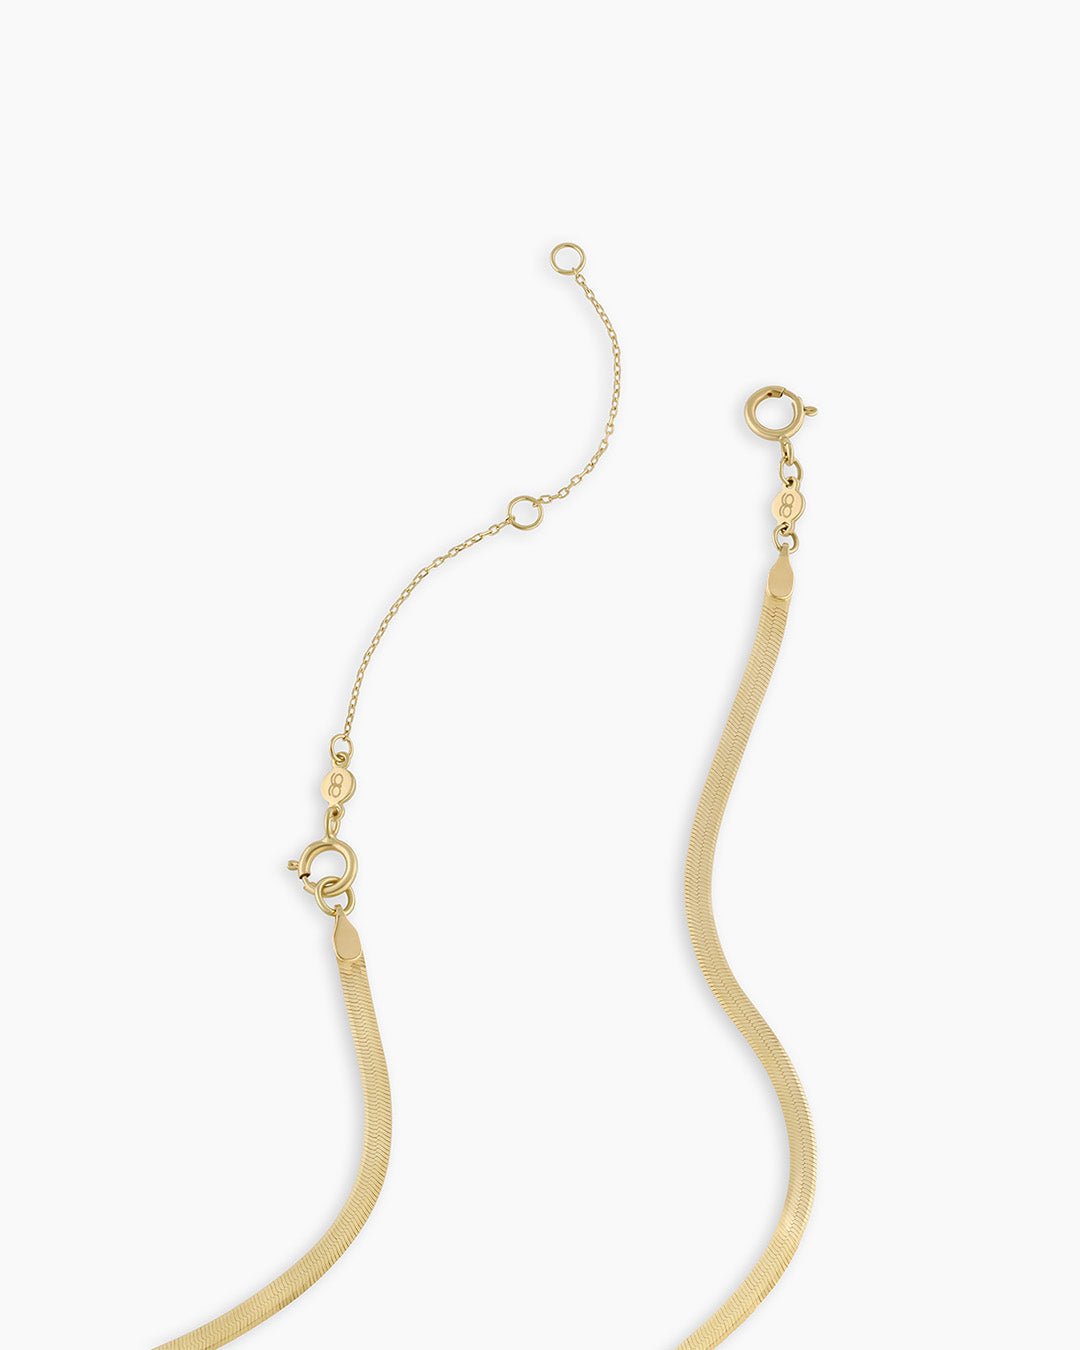 Gold Necklace Extender - Carrie Whelan Designs